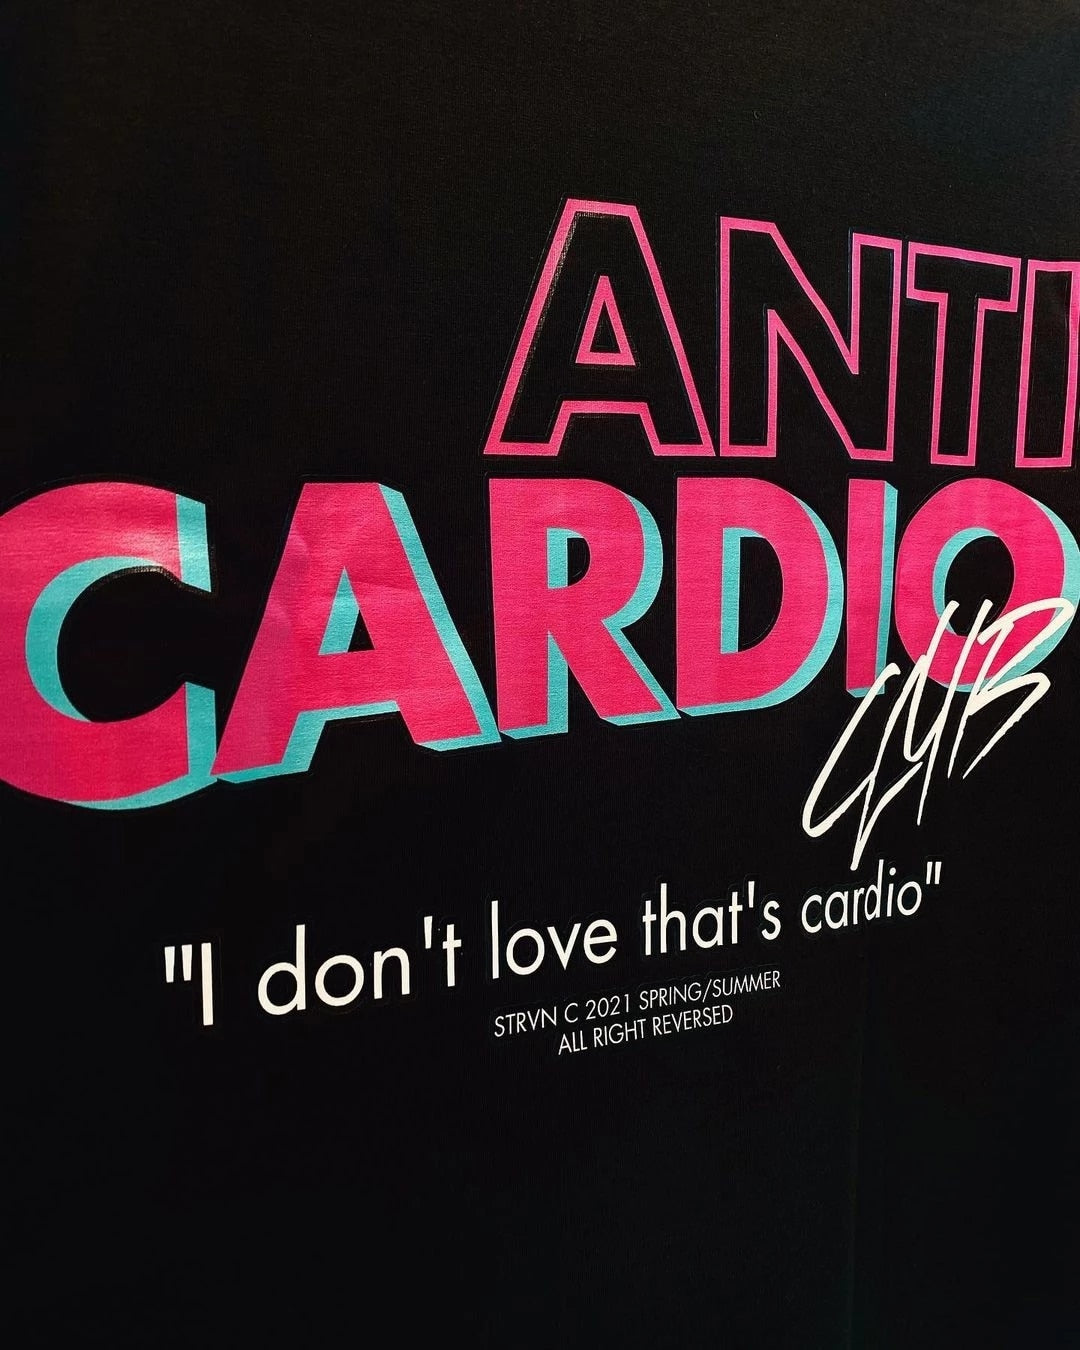 Men's Gym Shirt "Anti Cardio"